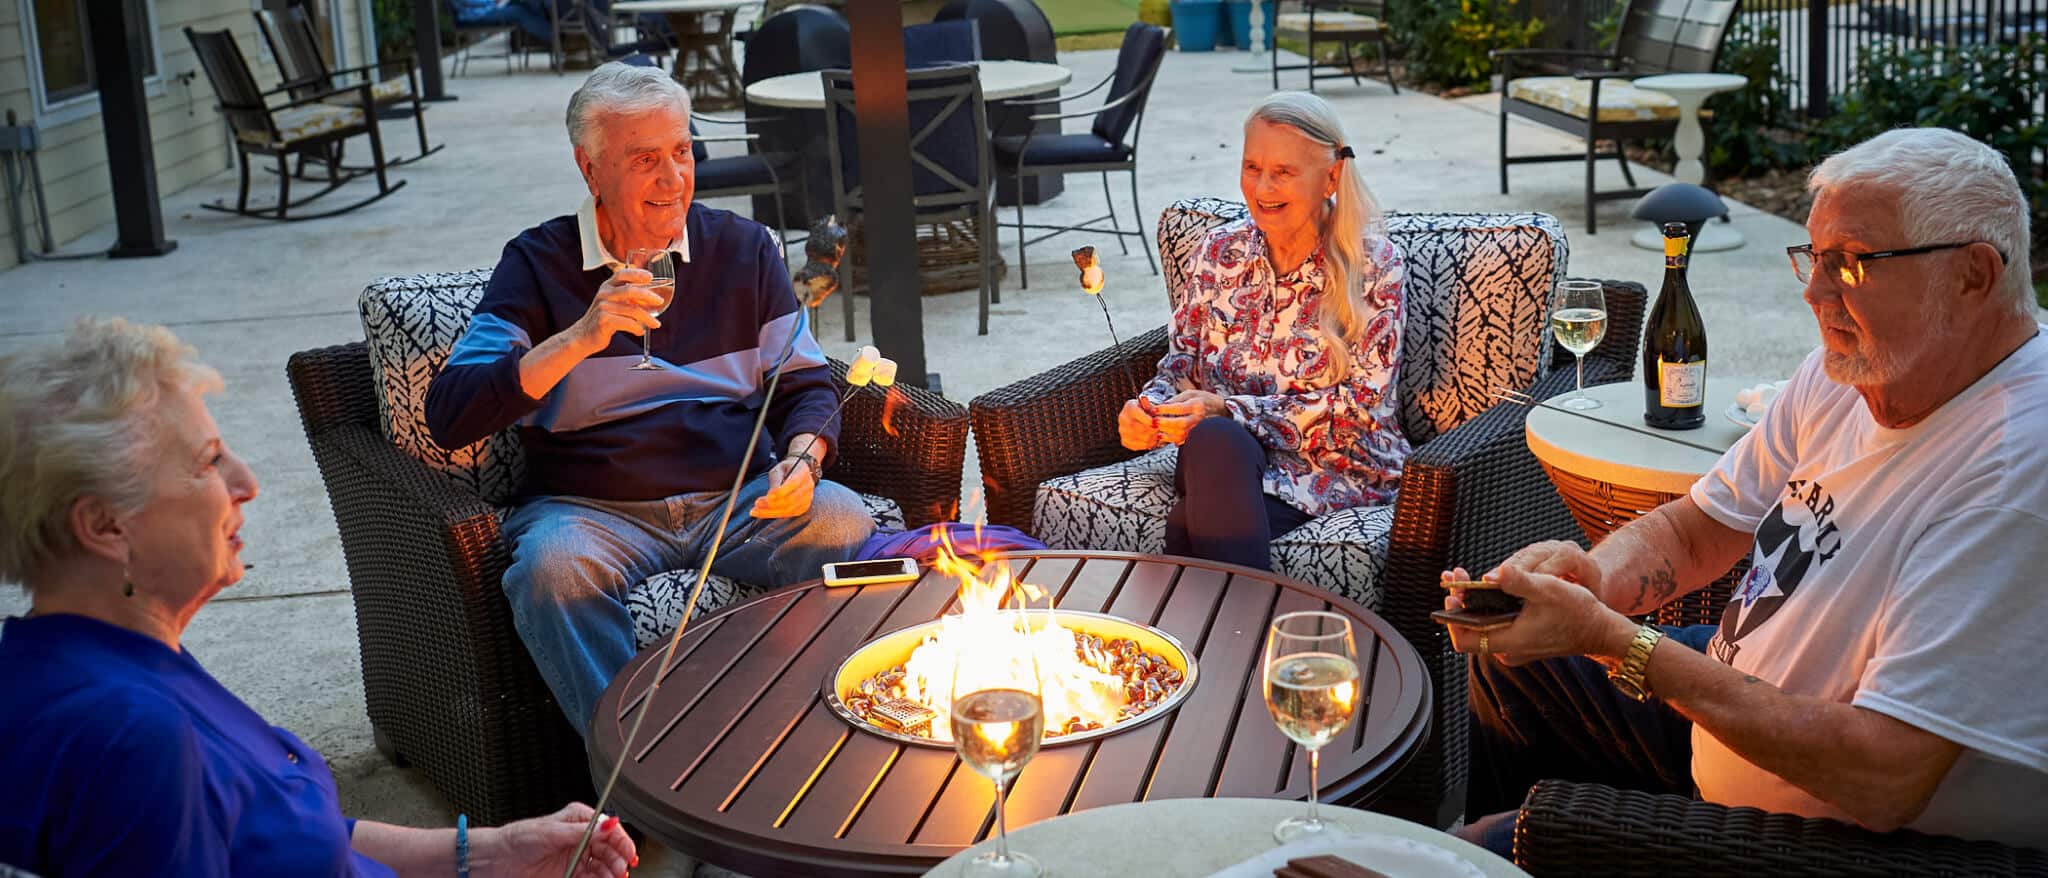 Residents roasting marshmallows on the patio